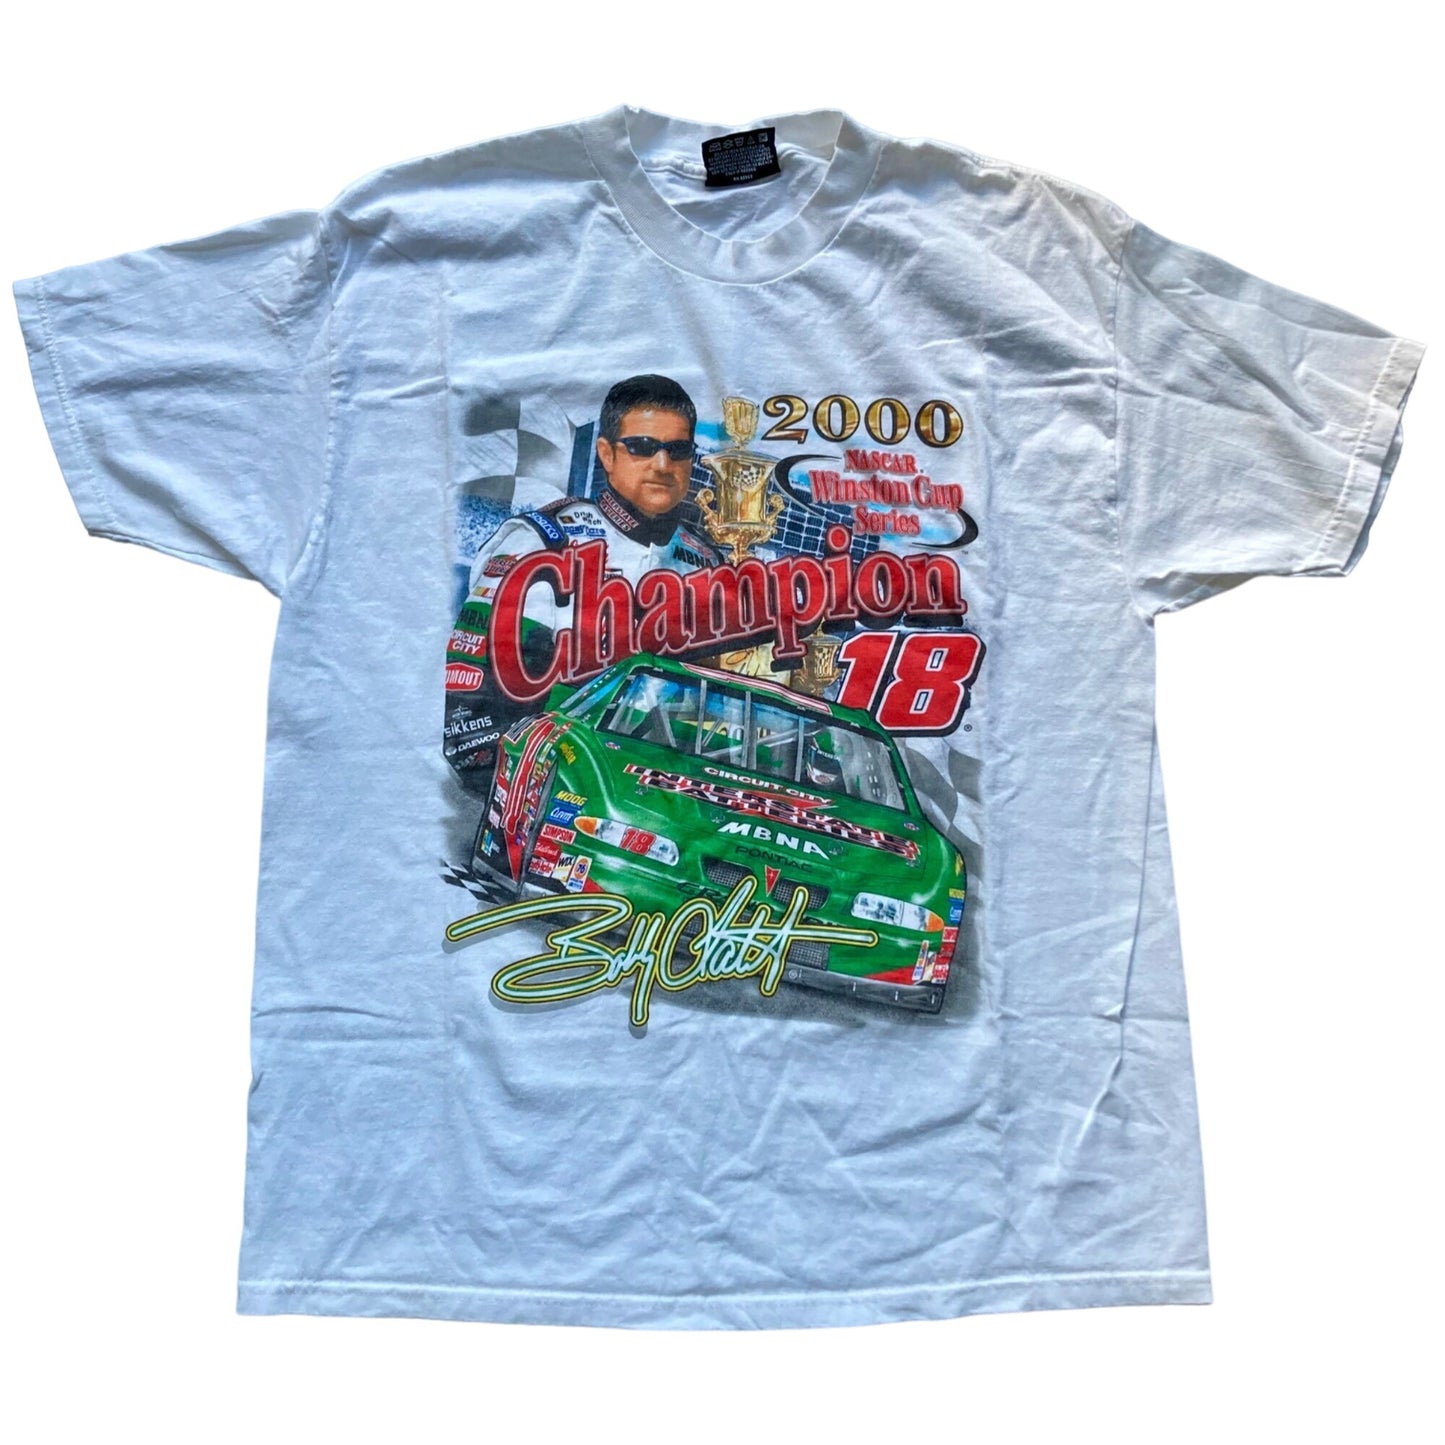 Vintage NASCAR Bobby Labonte 18 T-Shirt Winston Cup Series Champion Men's L NICE